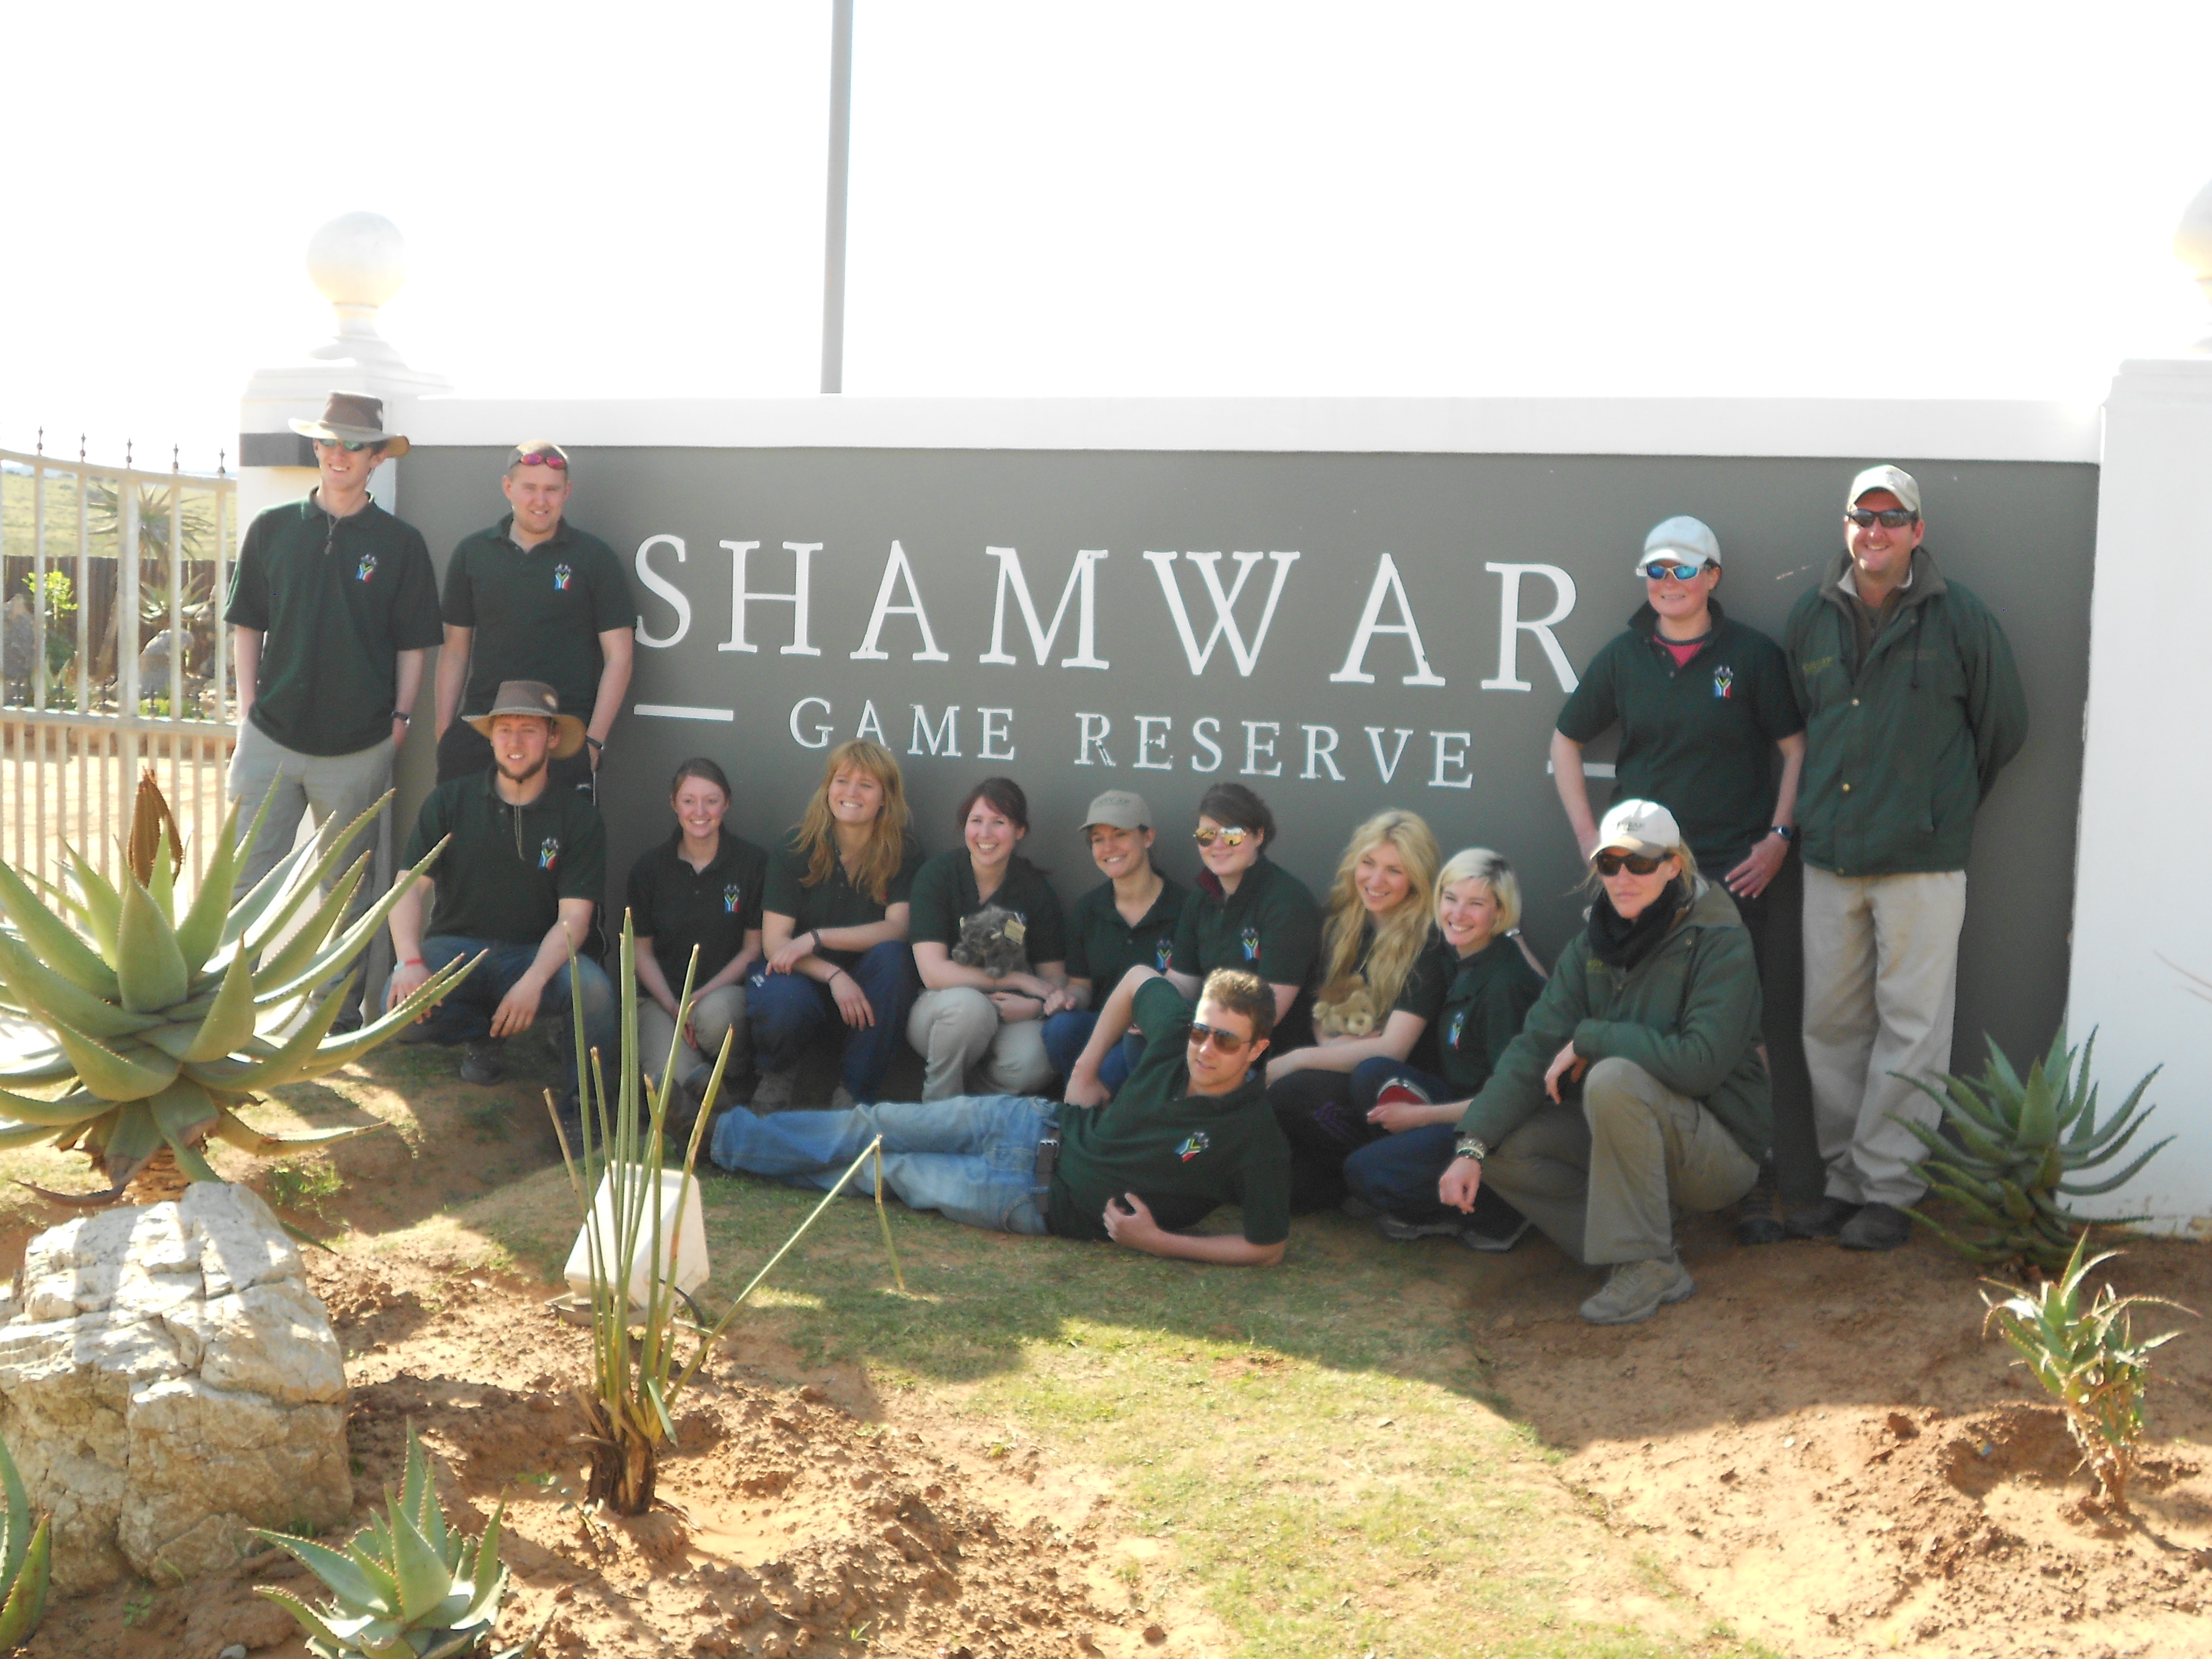 volunteers pose with the Shamwari Game Reserve sign